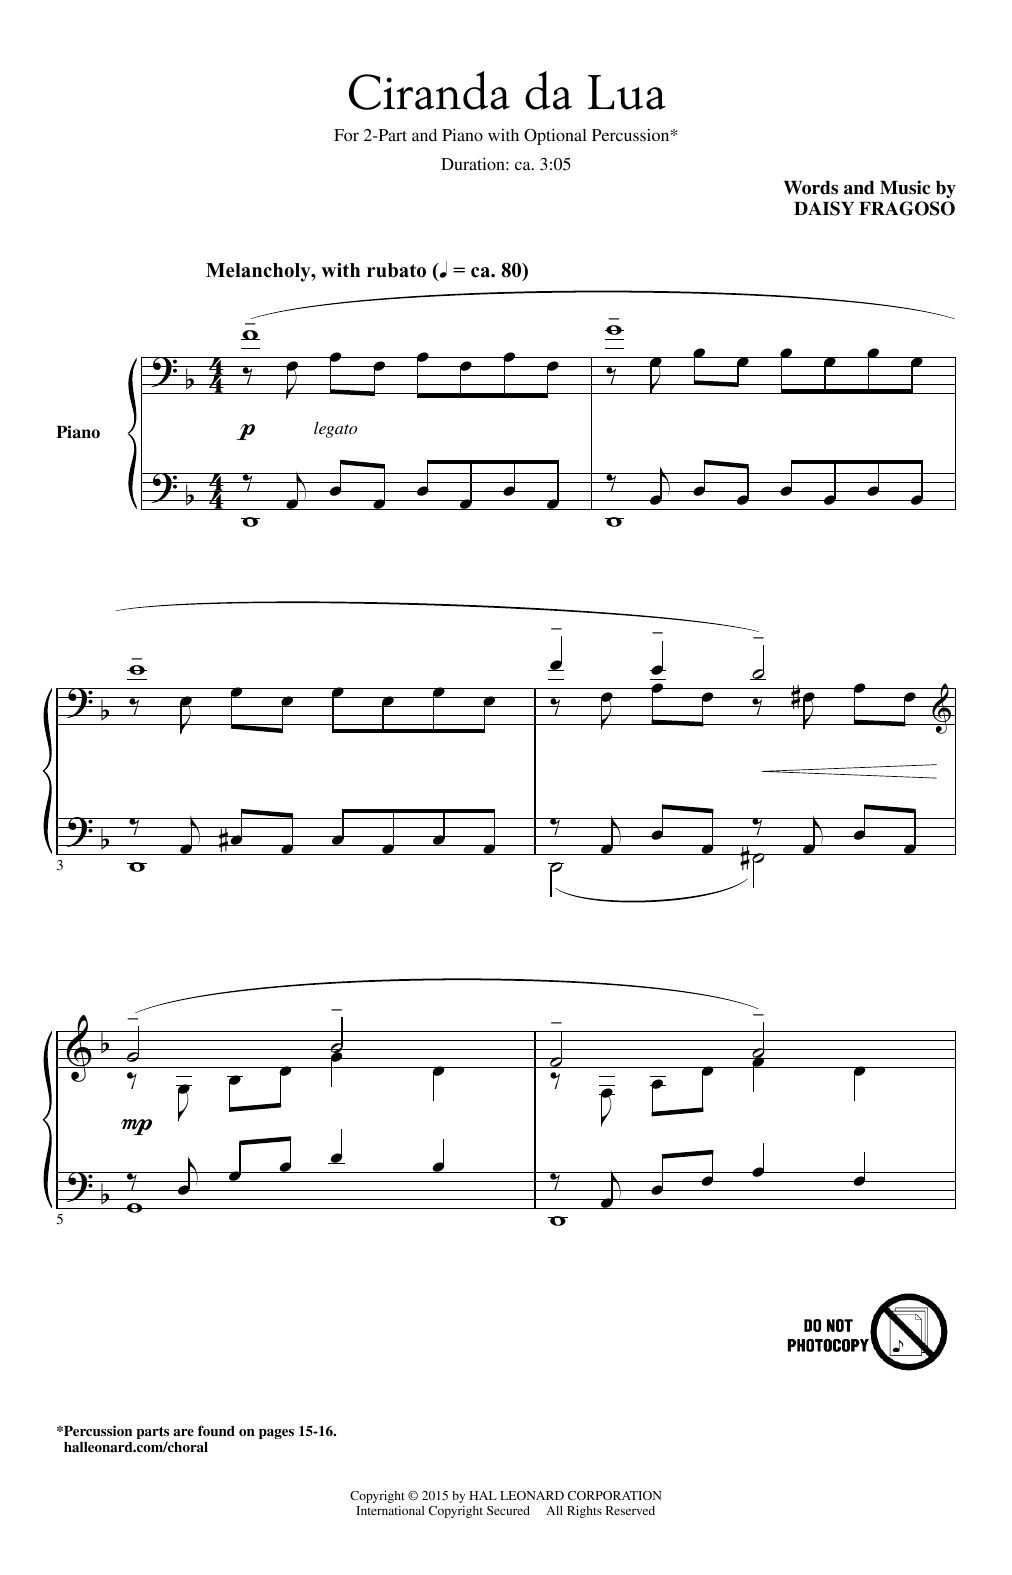 Download Daisy Fragoso Ciranda Da Lua Sheet Music and learn how to play 2-Part Choir PDF digital score in minutes